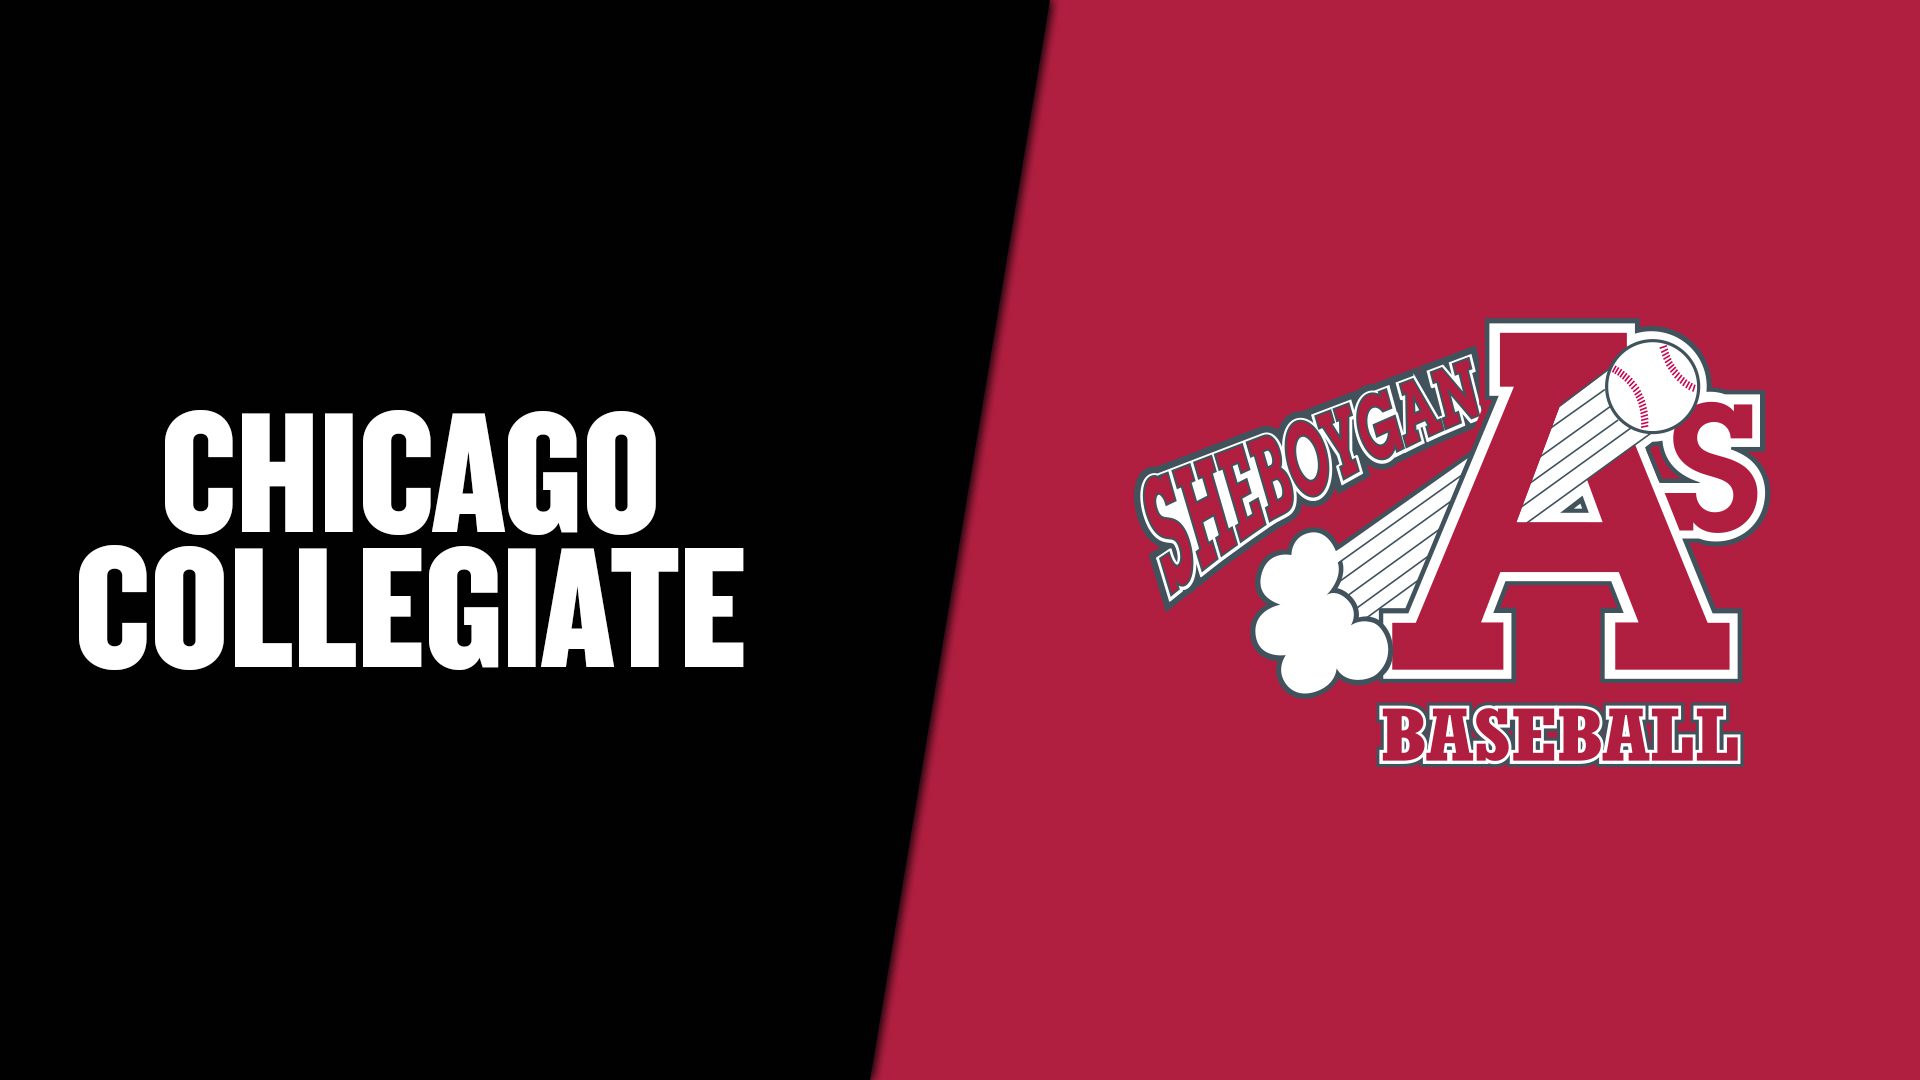 Sheboygan A's vs. Chicago Collegiate